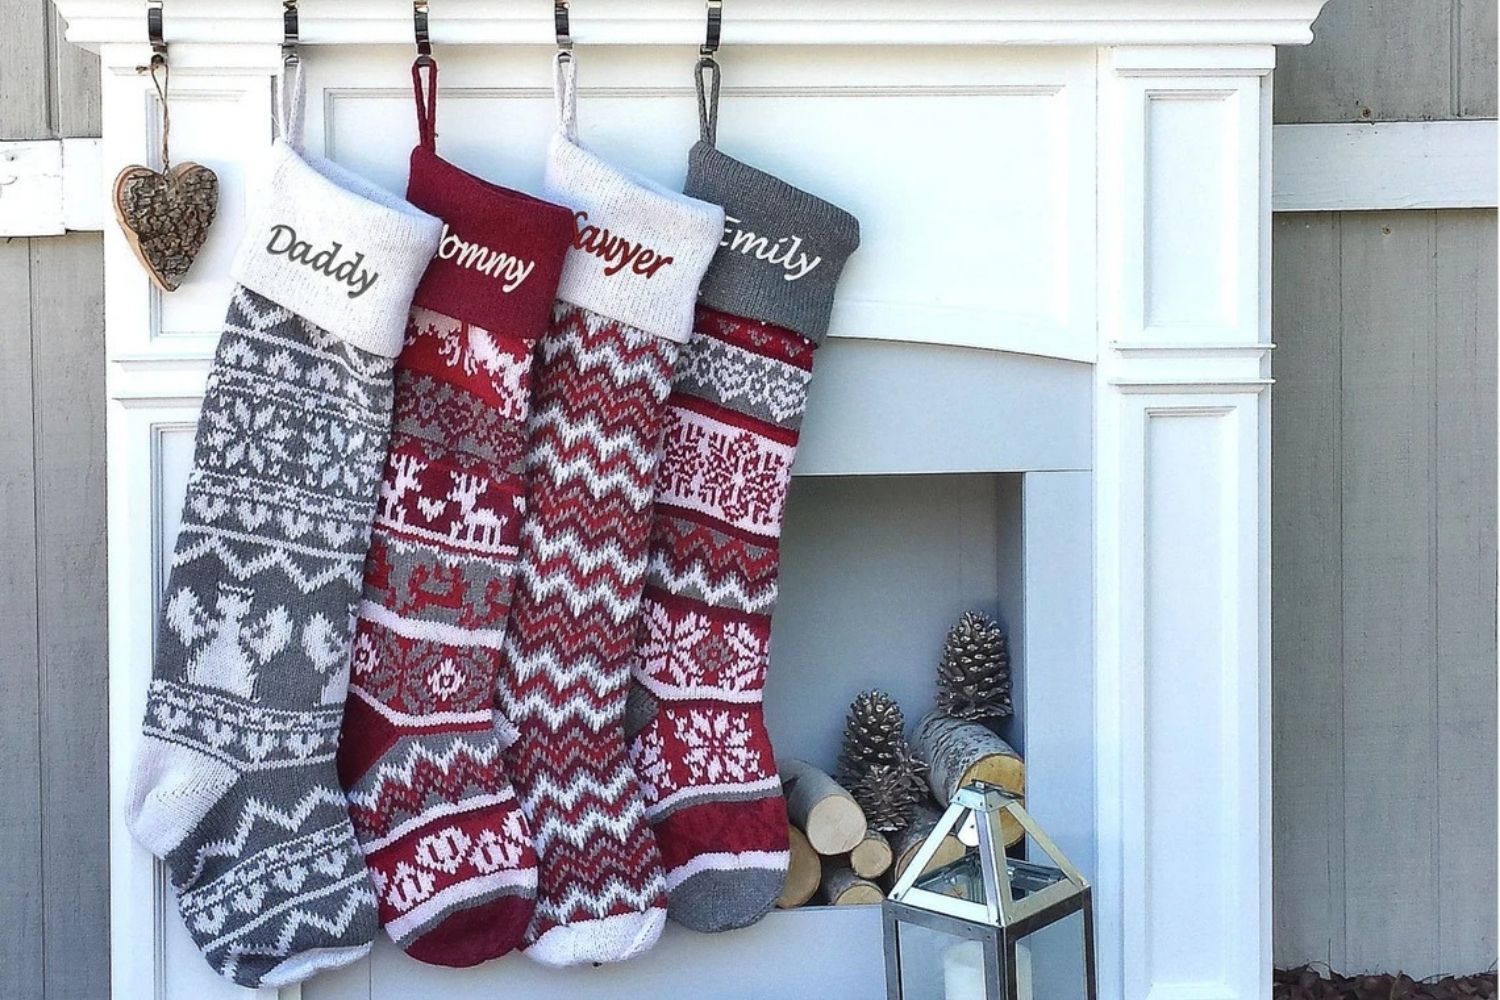 The Best Christmas Stockings Option: Etsy Personalized Large 28" Knitted Christmas Stockings